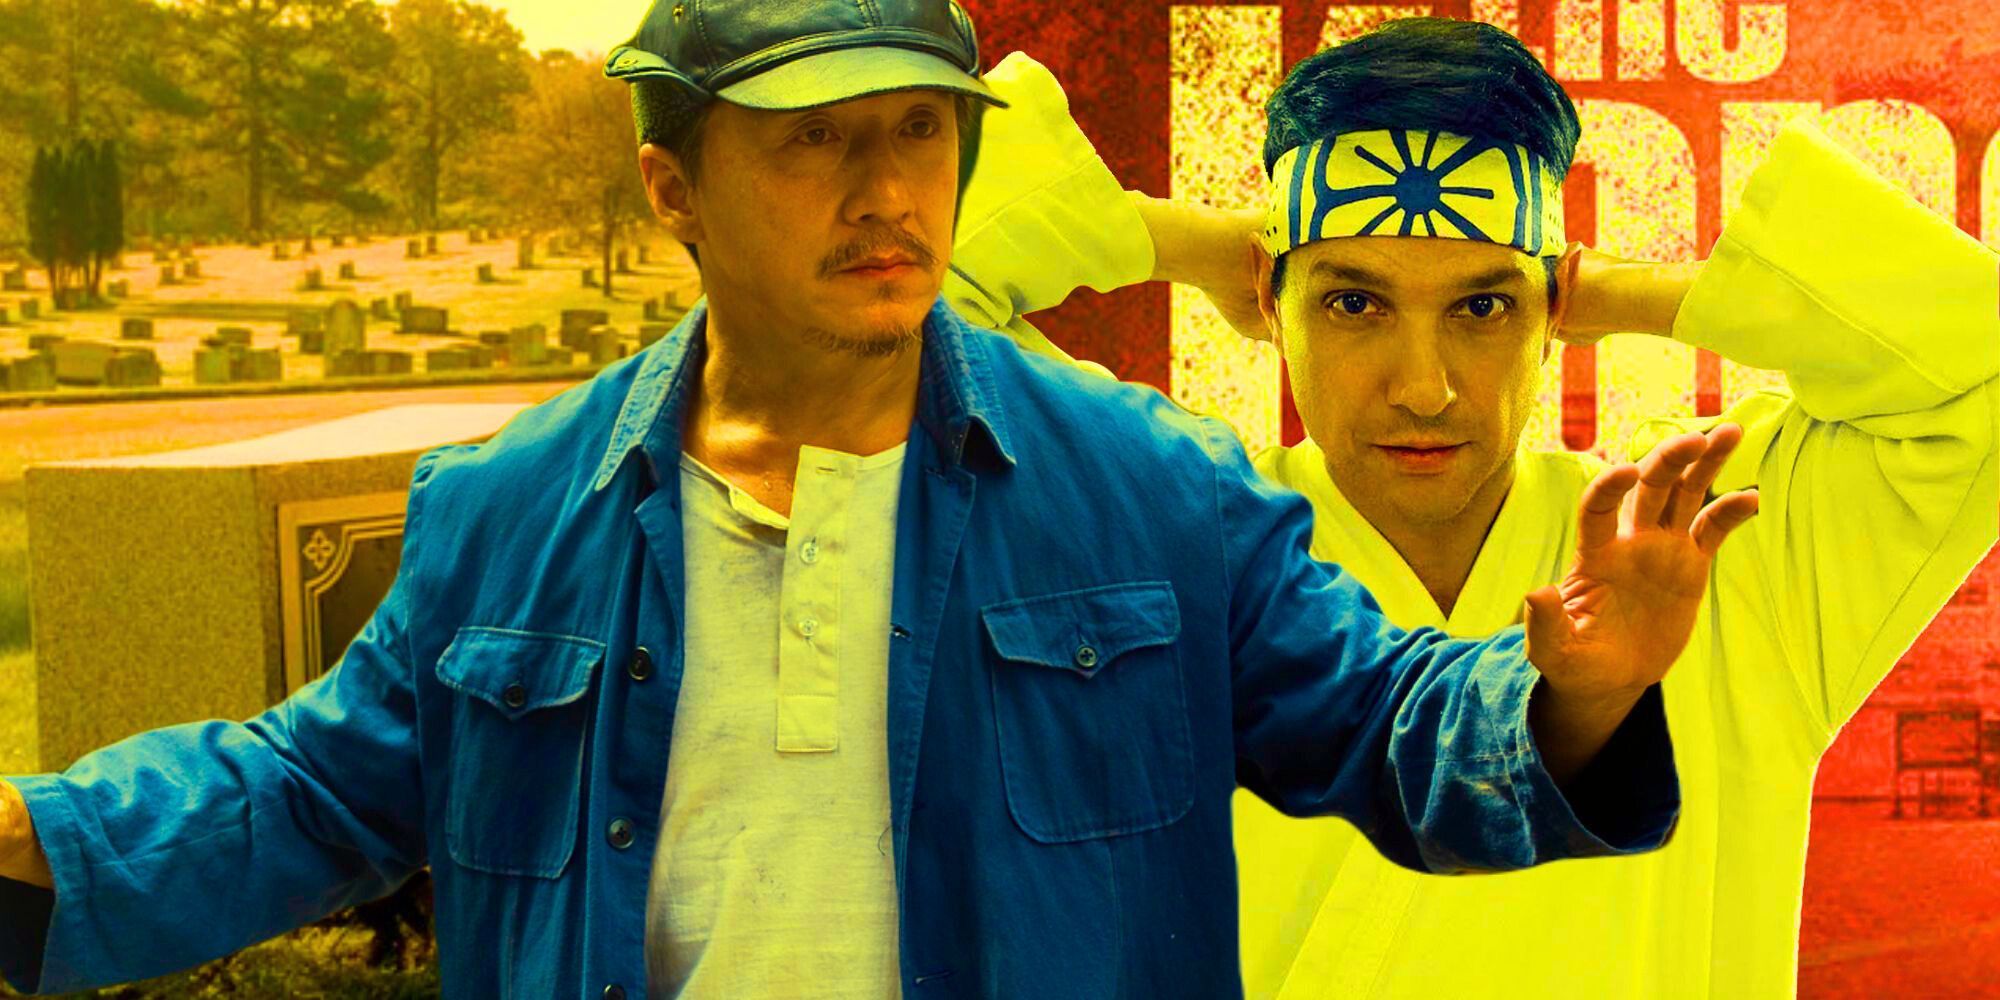 Jackie Chan ve Ralph Macchio, Karate Kid karakterleri olarak